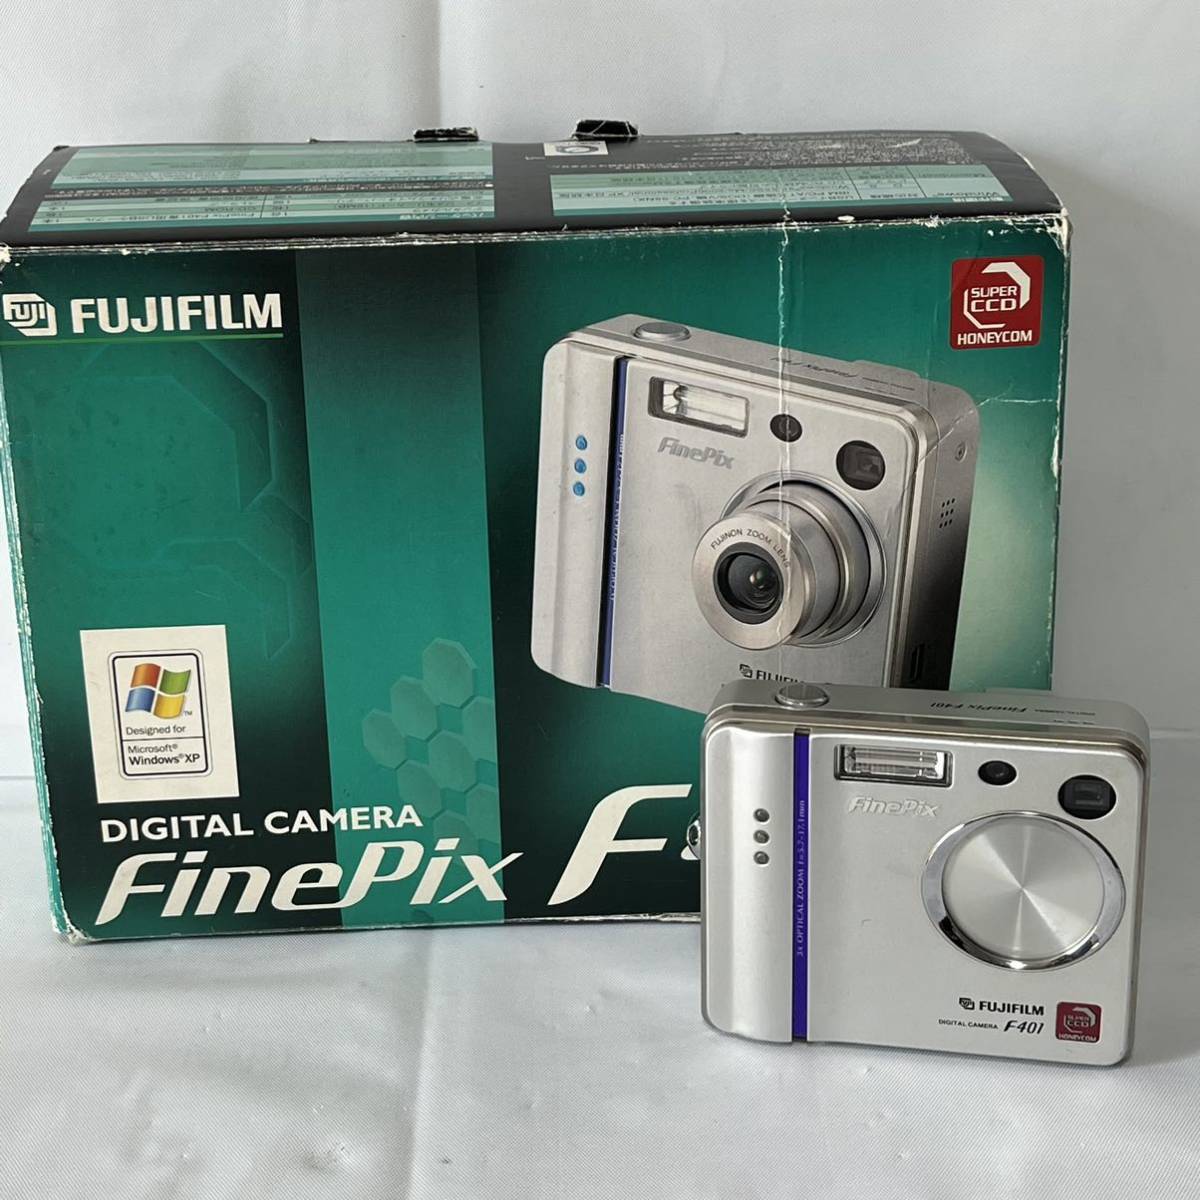 FUJIFILM FinePix F401 цифровая камера б/у рабочий товар с коробкой 